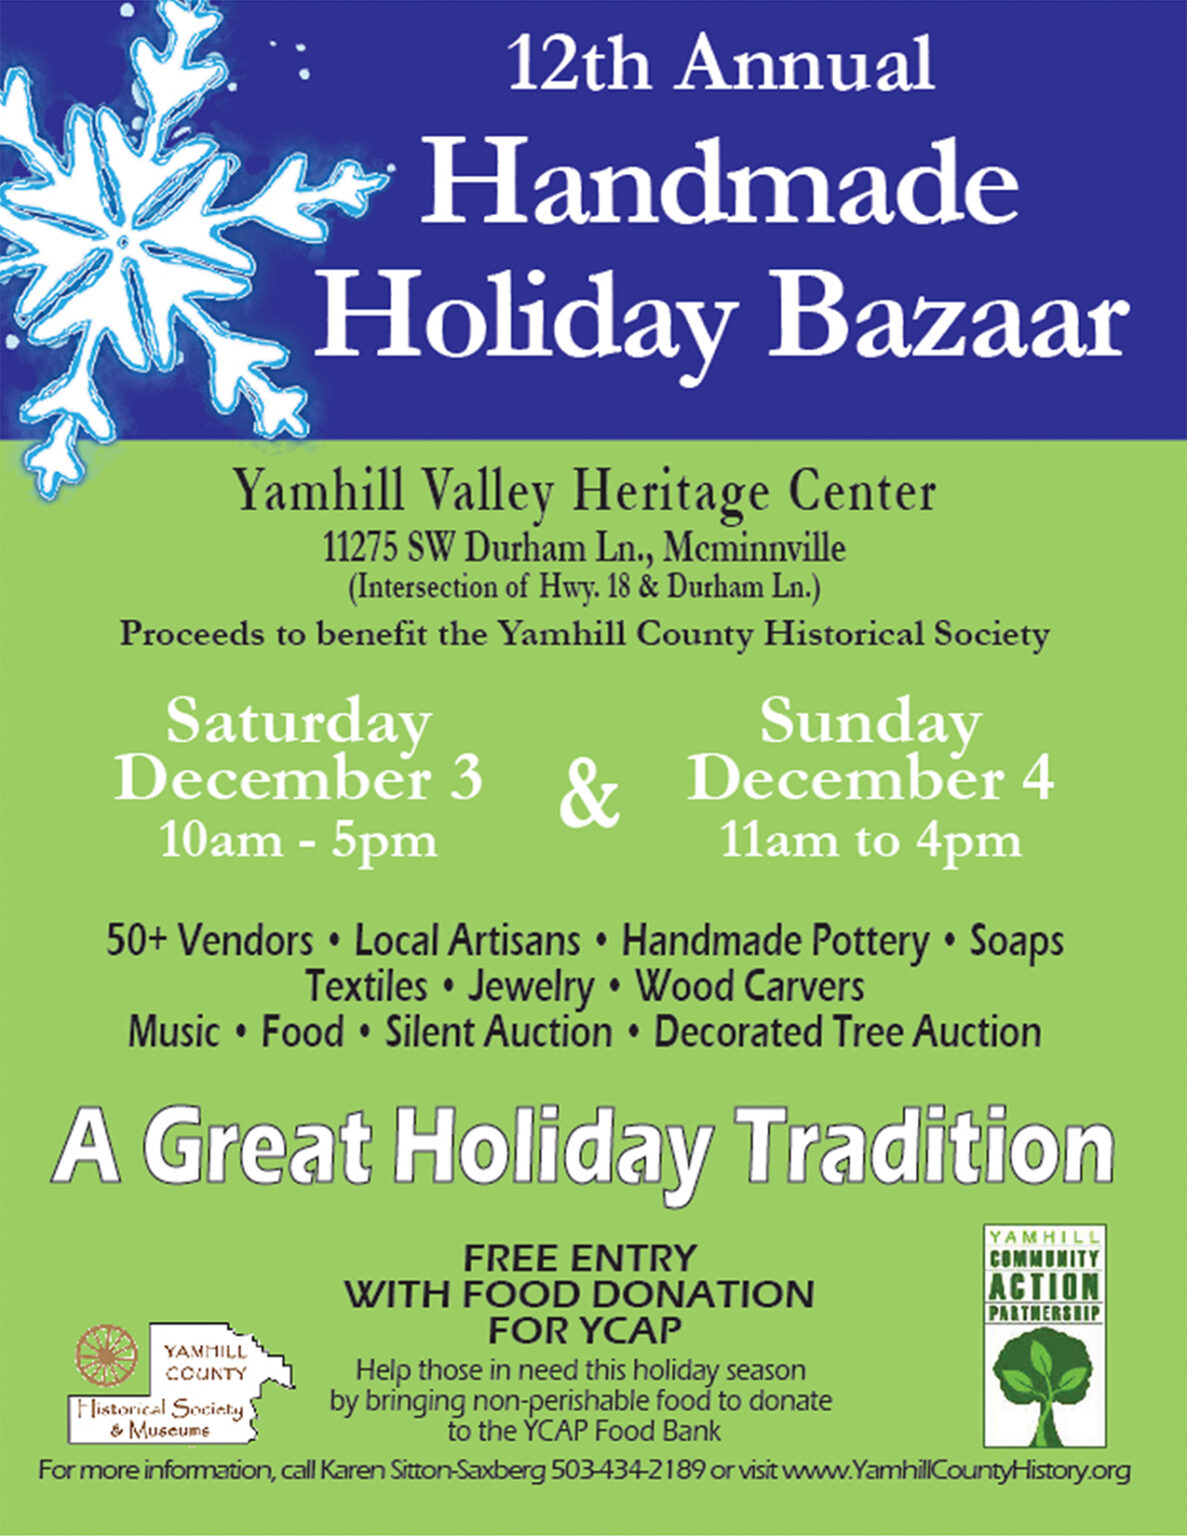 Handmade Holidays Bazaar Yamhill County Historical Society & Museums